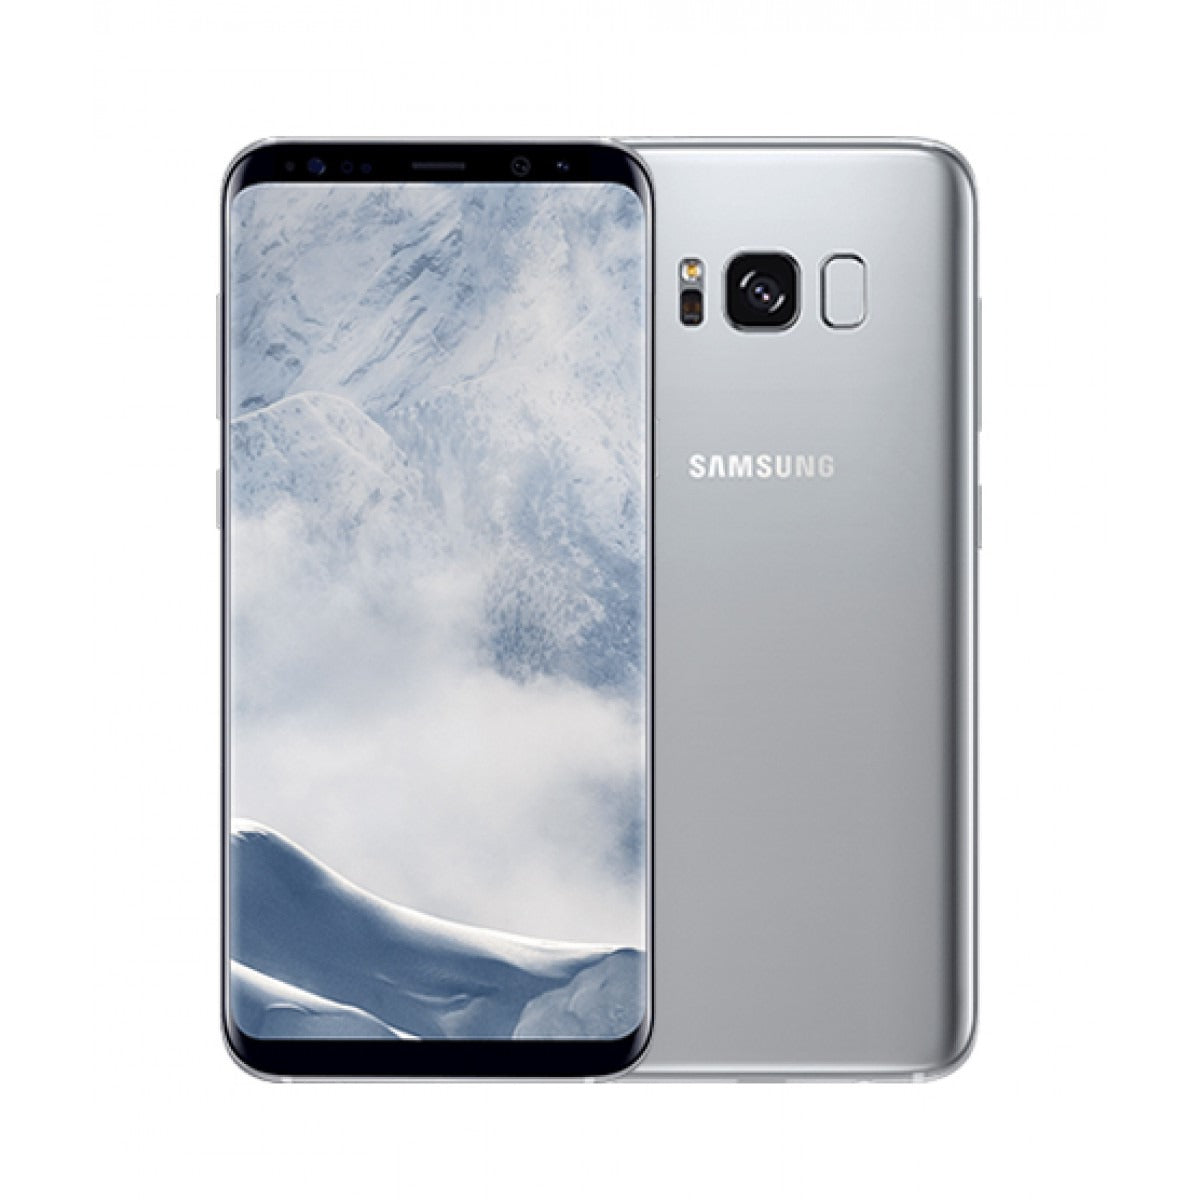 Samsung Galaxy S8+ - 64 GB - Arctic Silver - U.S. Cellular - CDM